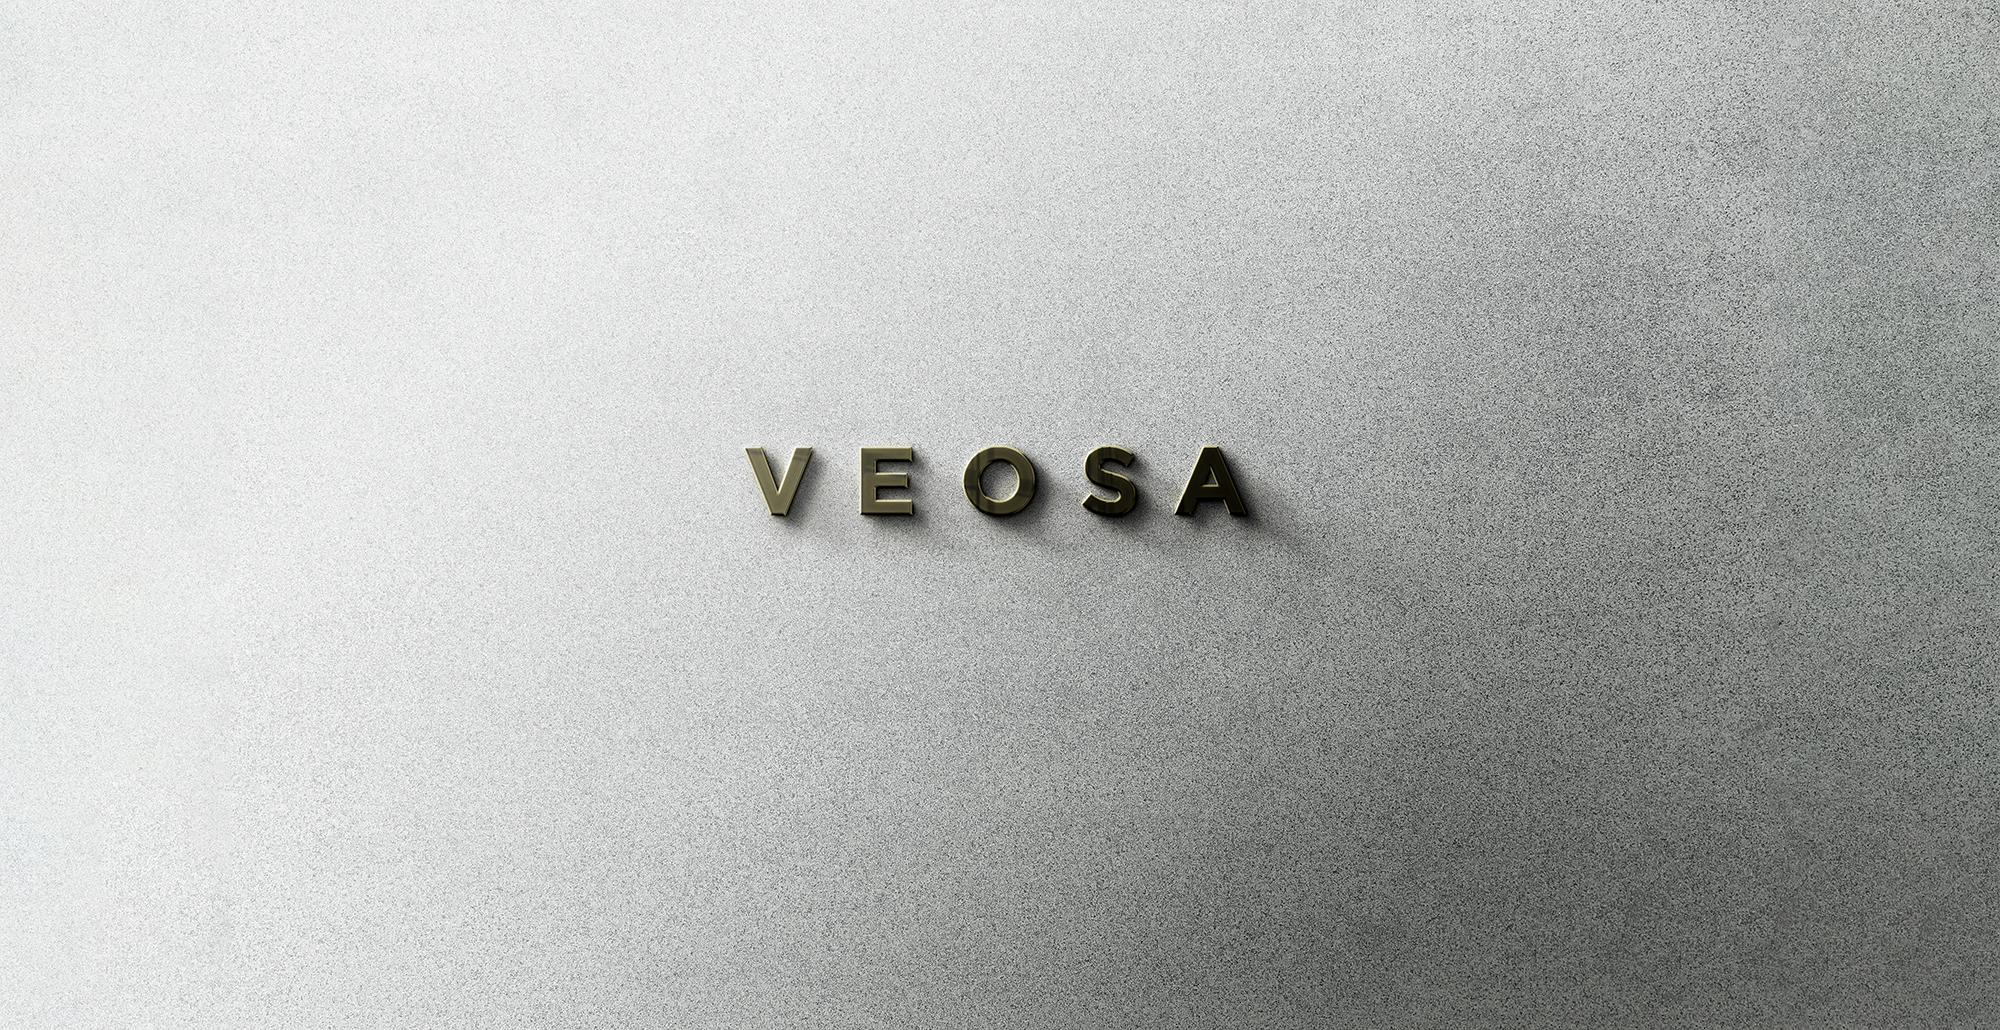 veosa logo on a concrete wall